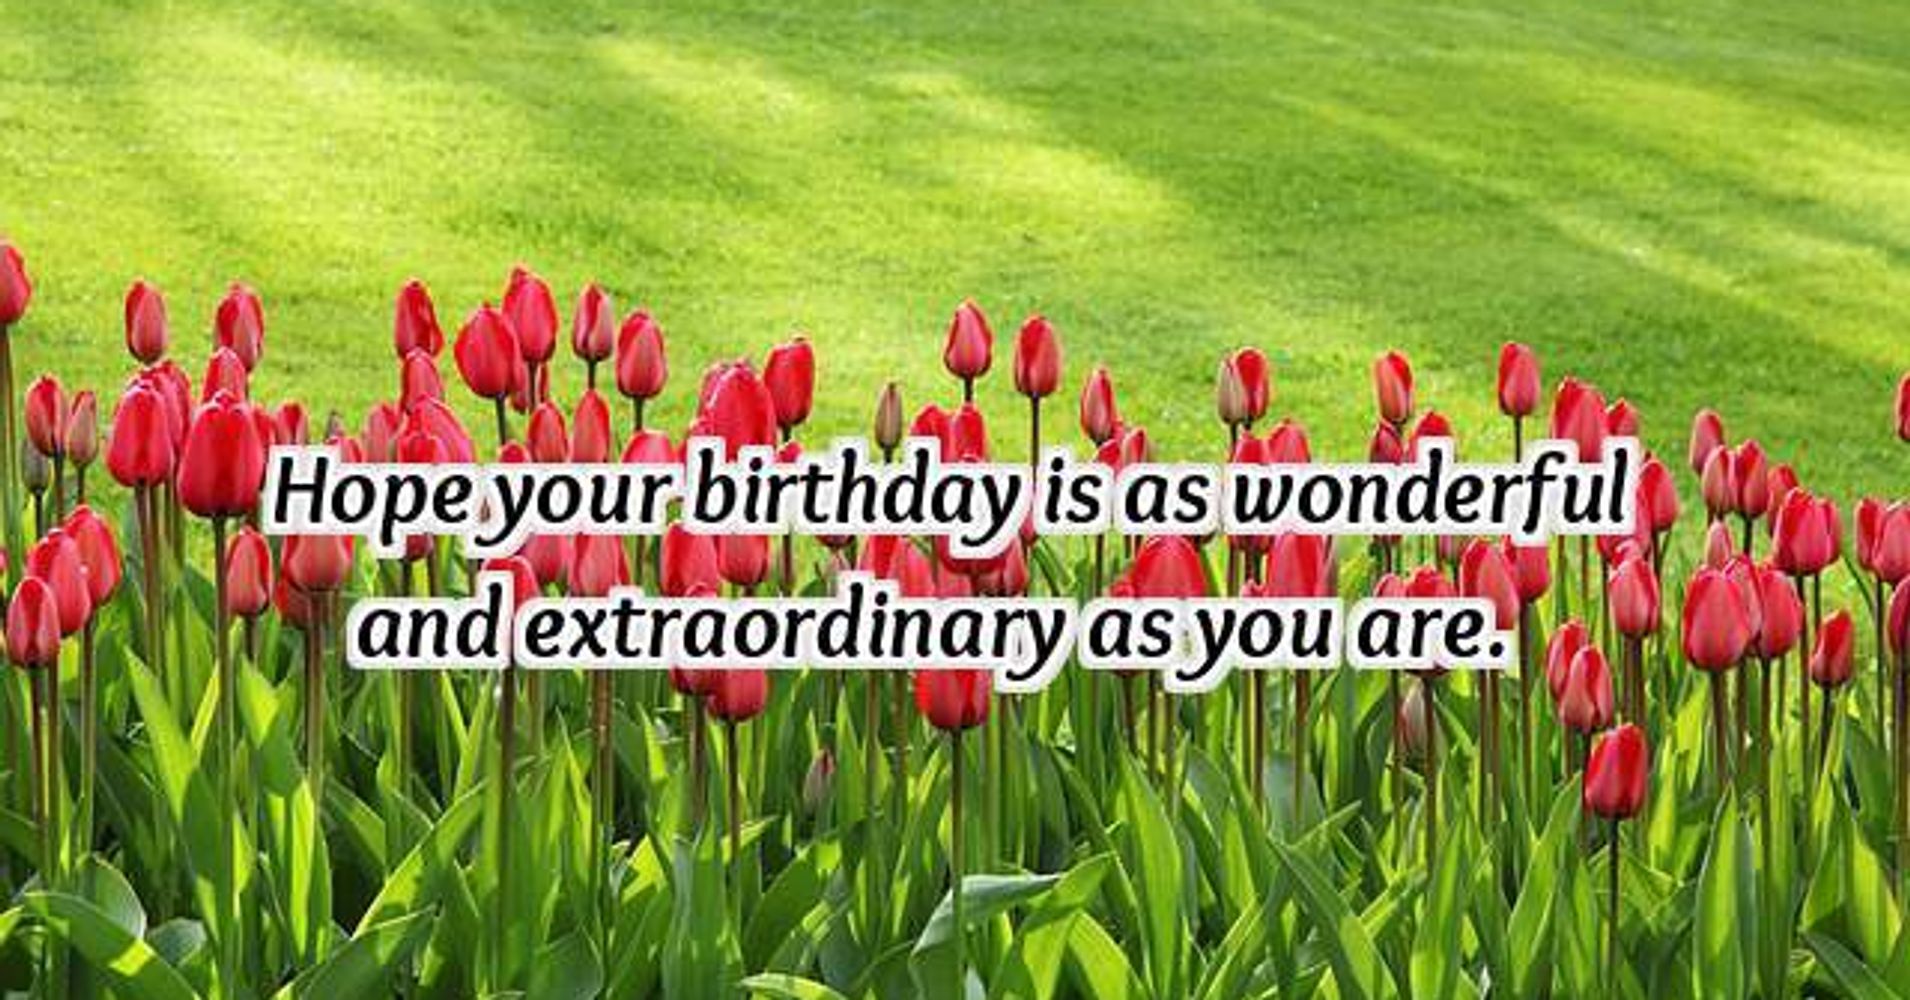 Download 23 Birthday Wishes for Friends & Best Friend - Happy ...